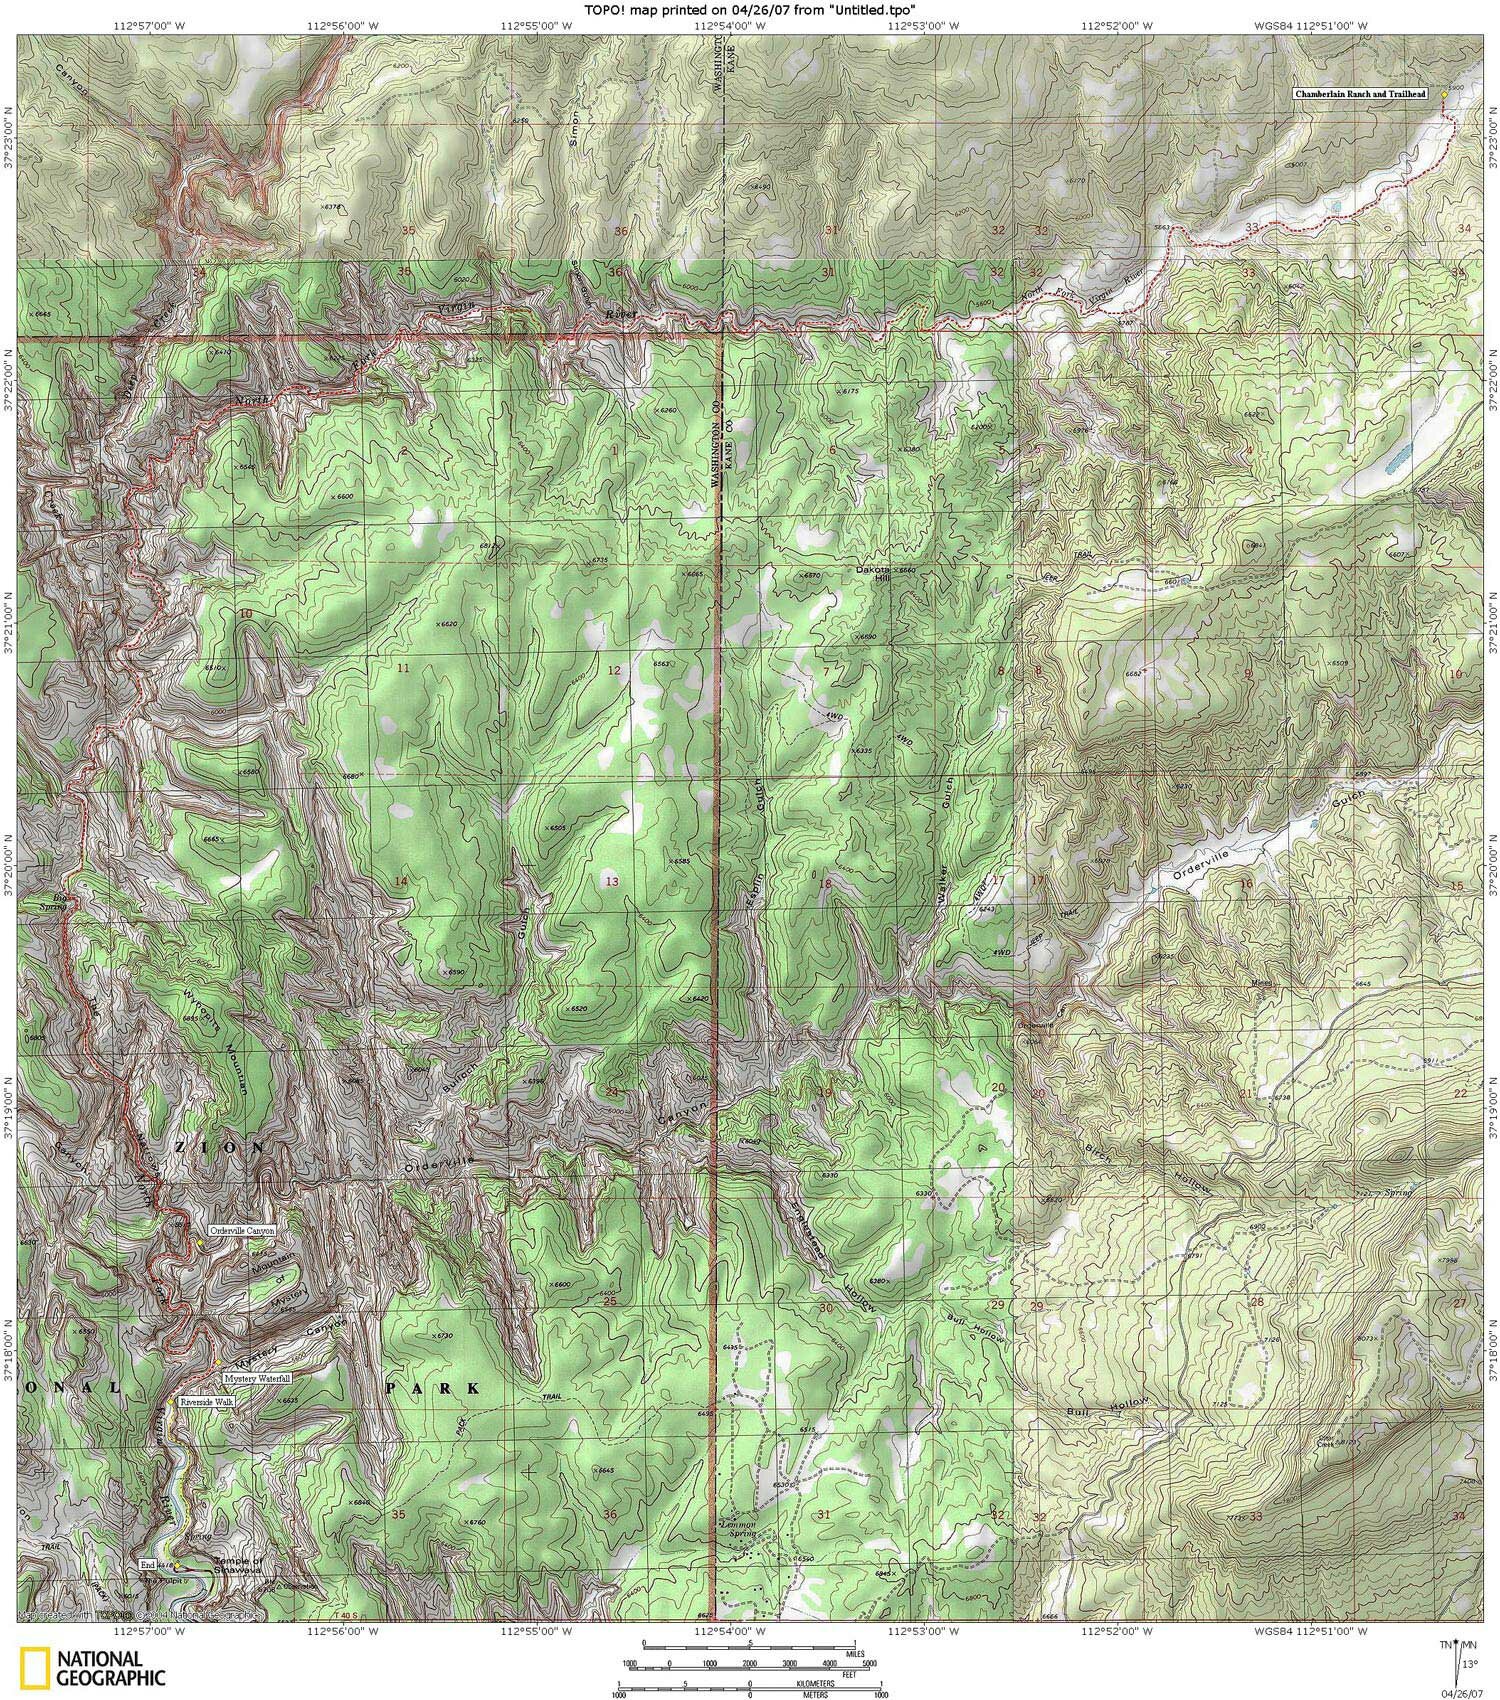 Zion Narrows Map